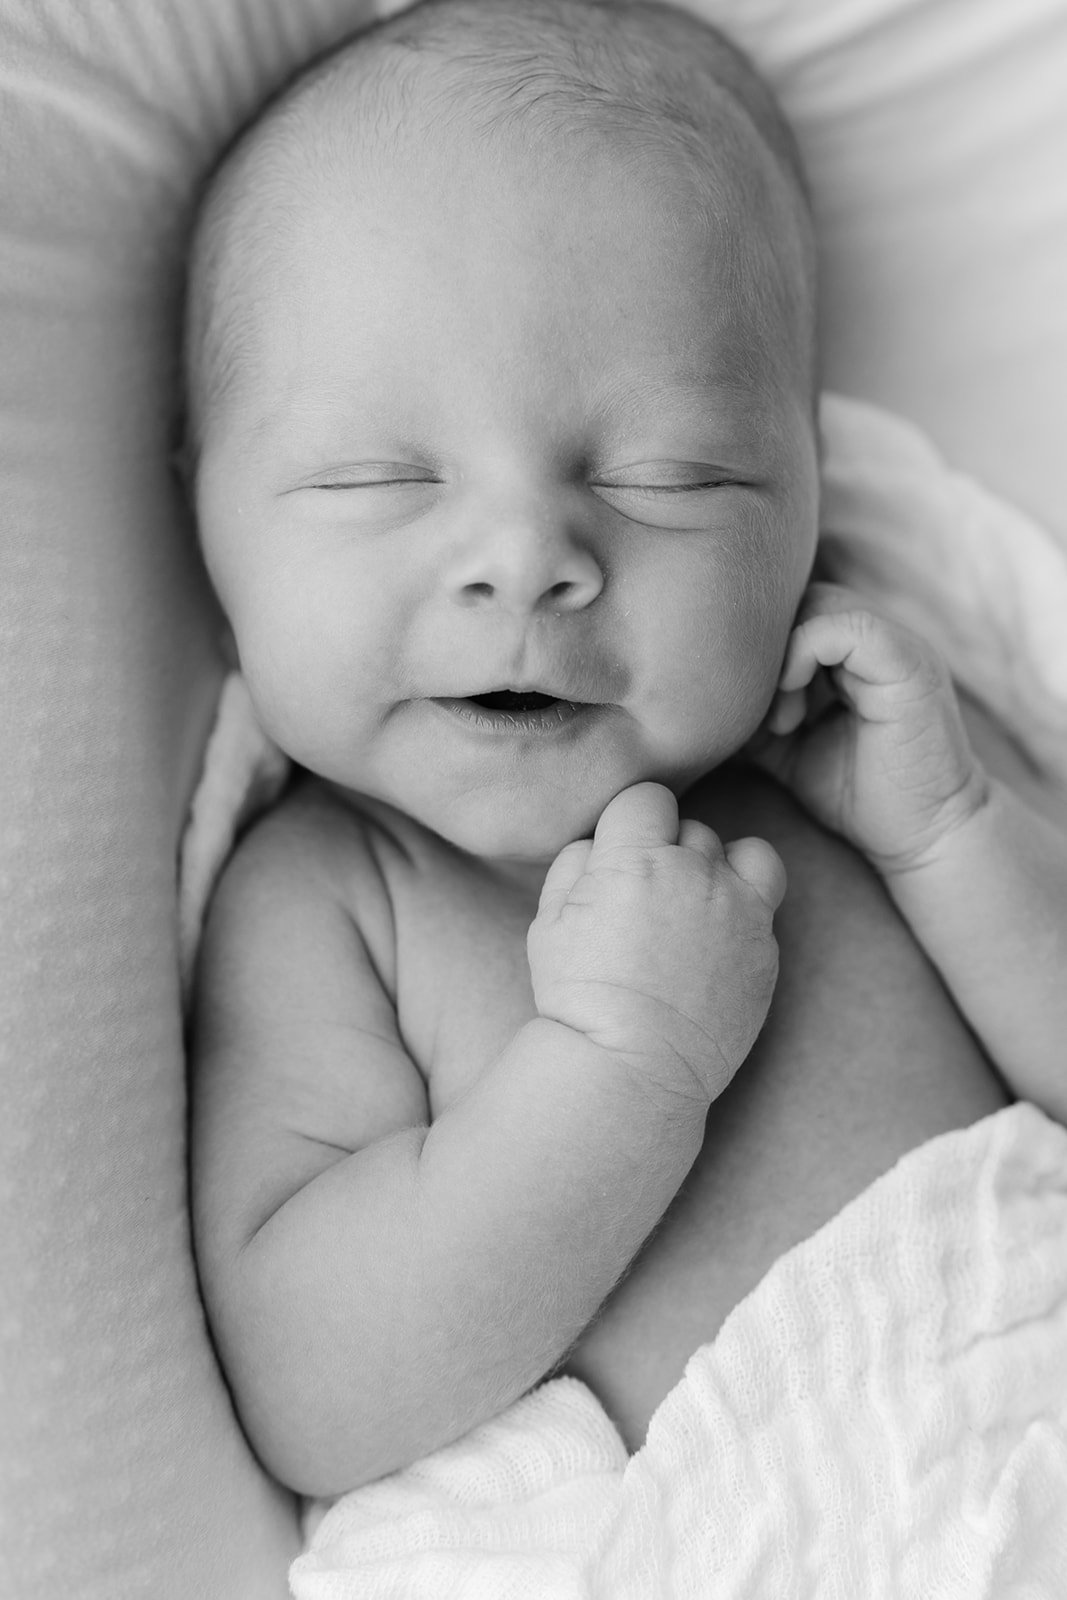 houston-newborn-photographer-kimberly-brooke-lifestlye-baby-345.jpg